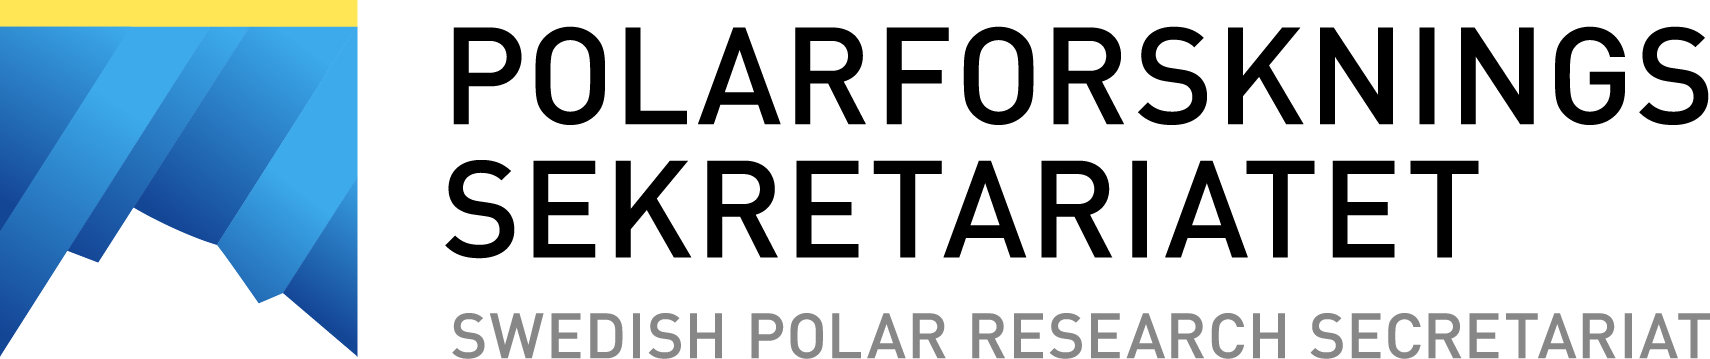 Polarforskningssekretariatet